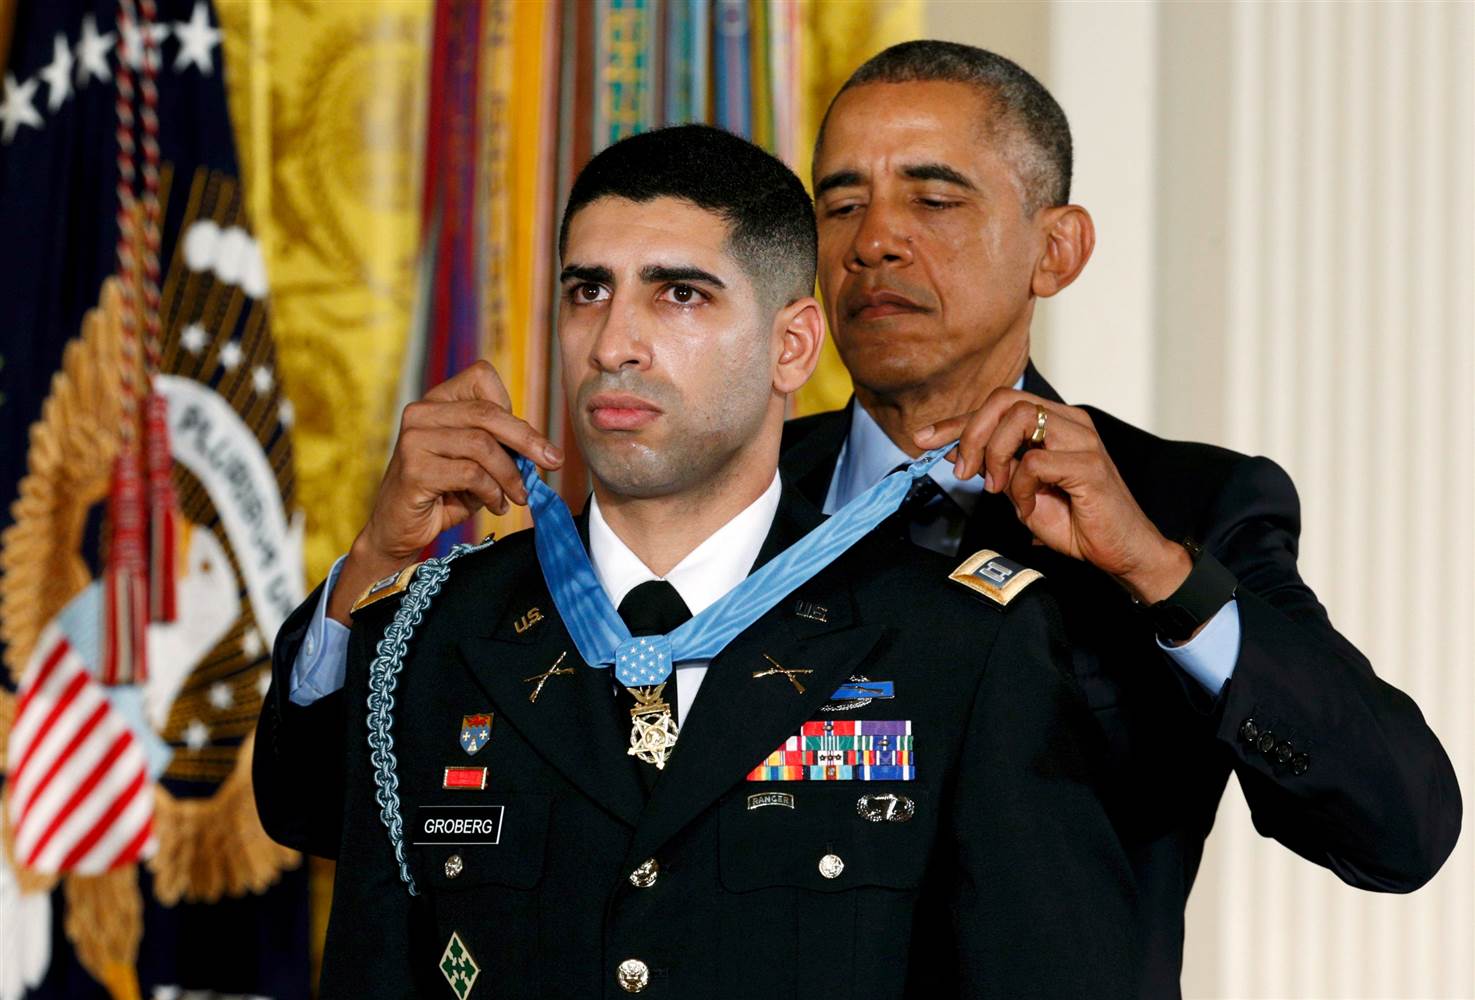 President Barack Obama awards US Army Captain Florent Groberg with the nation's highest honour.